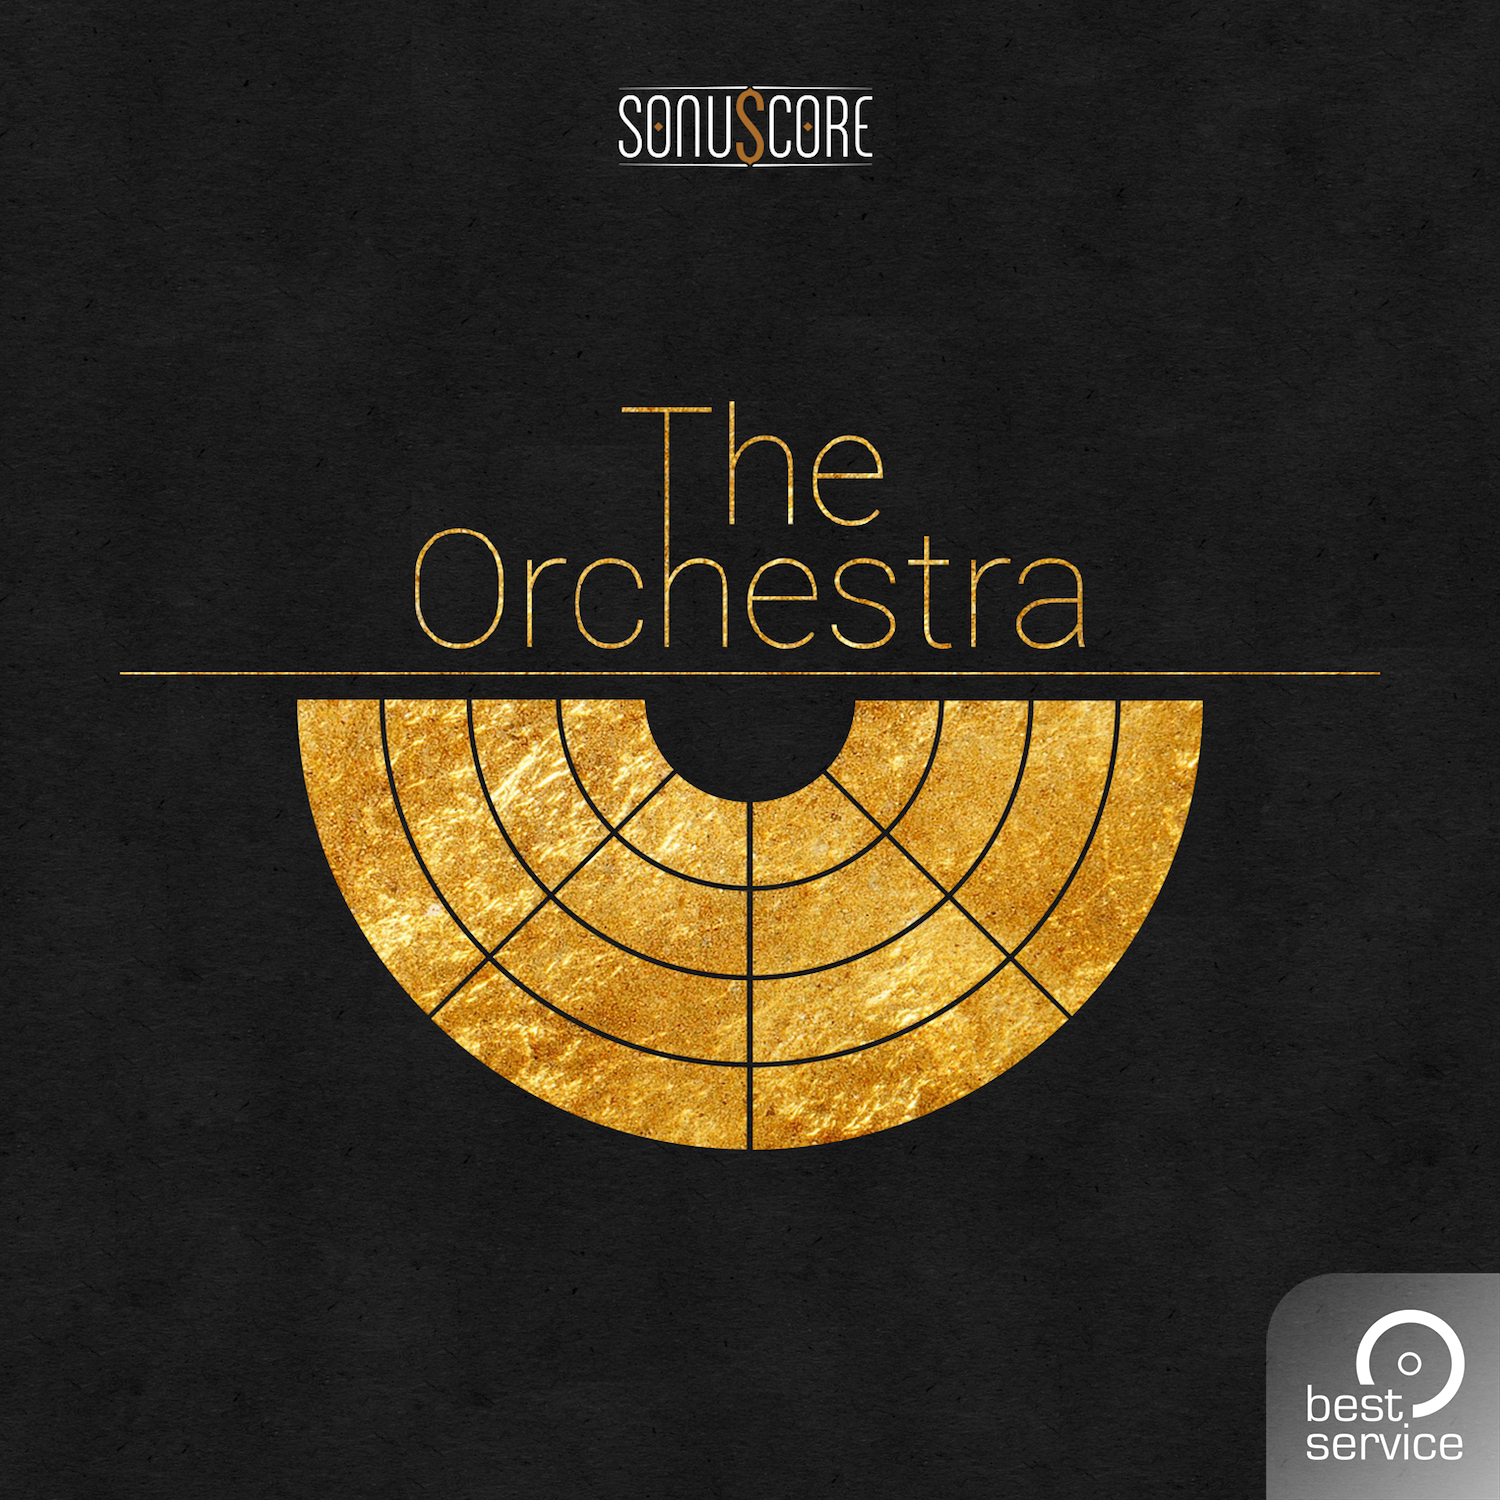 The orchestra complete. Sonuscore - the Orchestra complete 2. The Orchestra Kontakt. Sonuscore - the Orchestra complete. Sonuscore - the Orchestra complete 3.